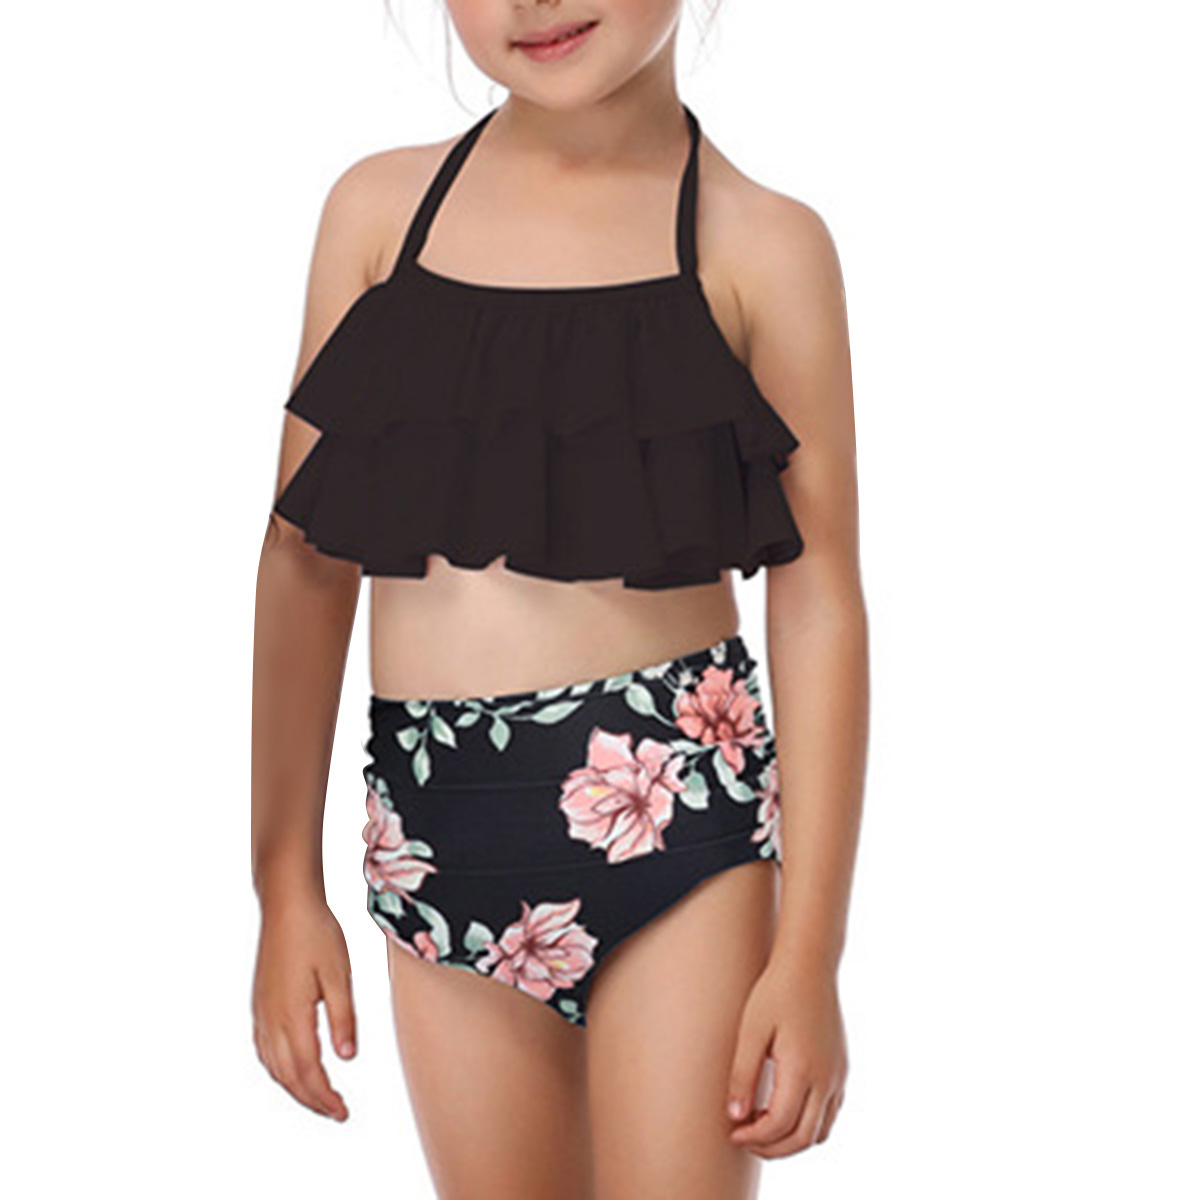 Toddler Kids Baby Girls Two Pieces Swimsuit Ruffle Crop Top+Short Bottom Bathing Suit Swimwear